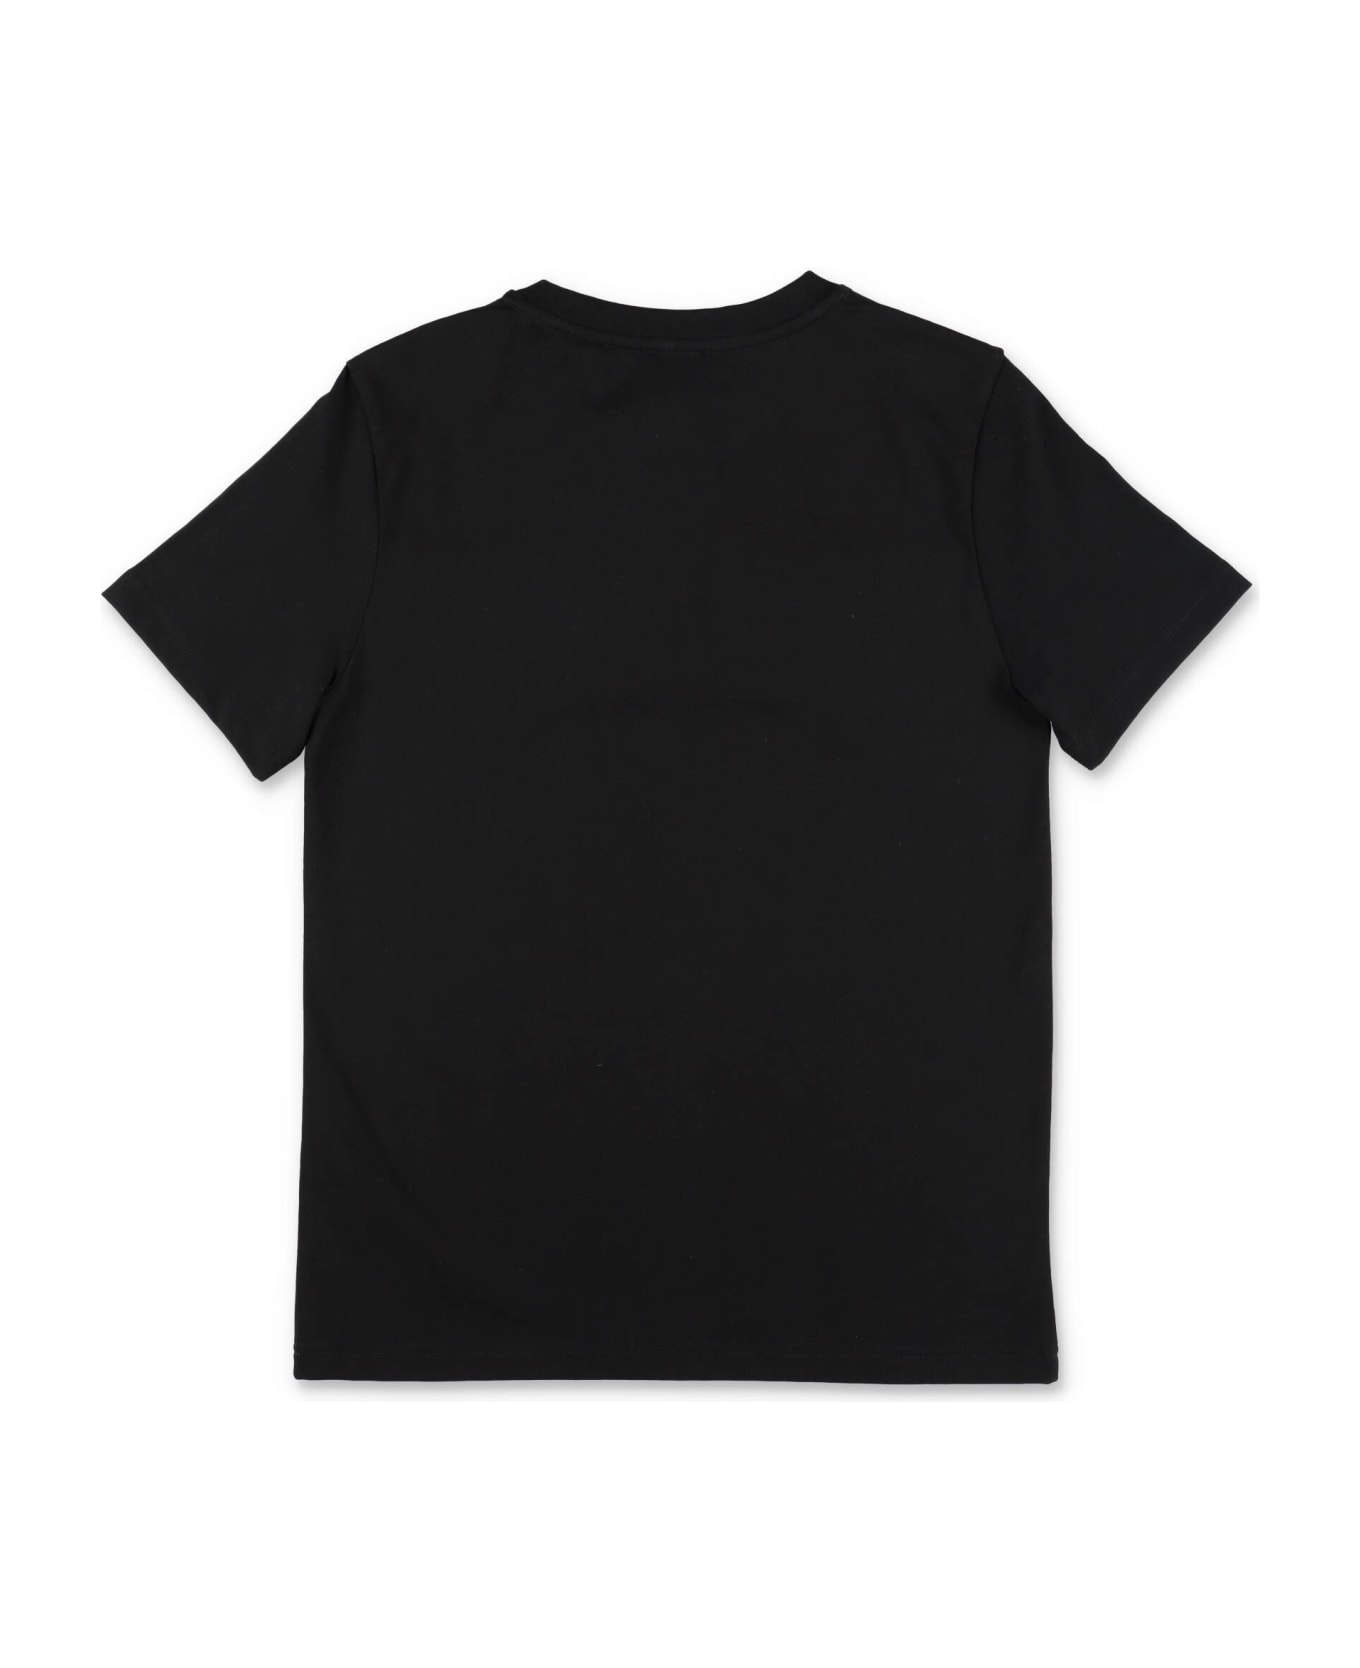 Givenchy T-shirt Nera In Jersey Di Cotone Bambino - Nero Tシャツ＆ポロシャツ